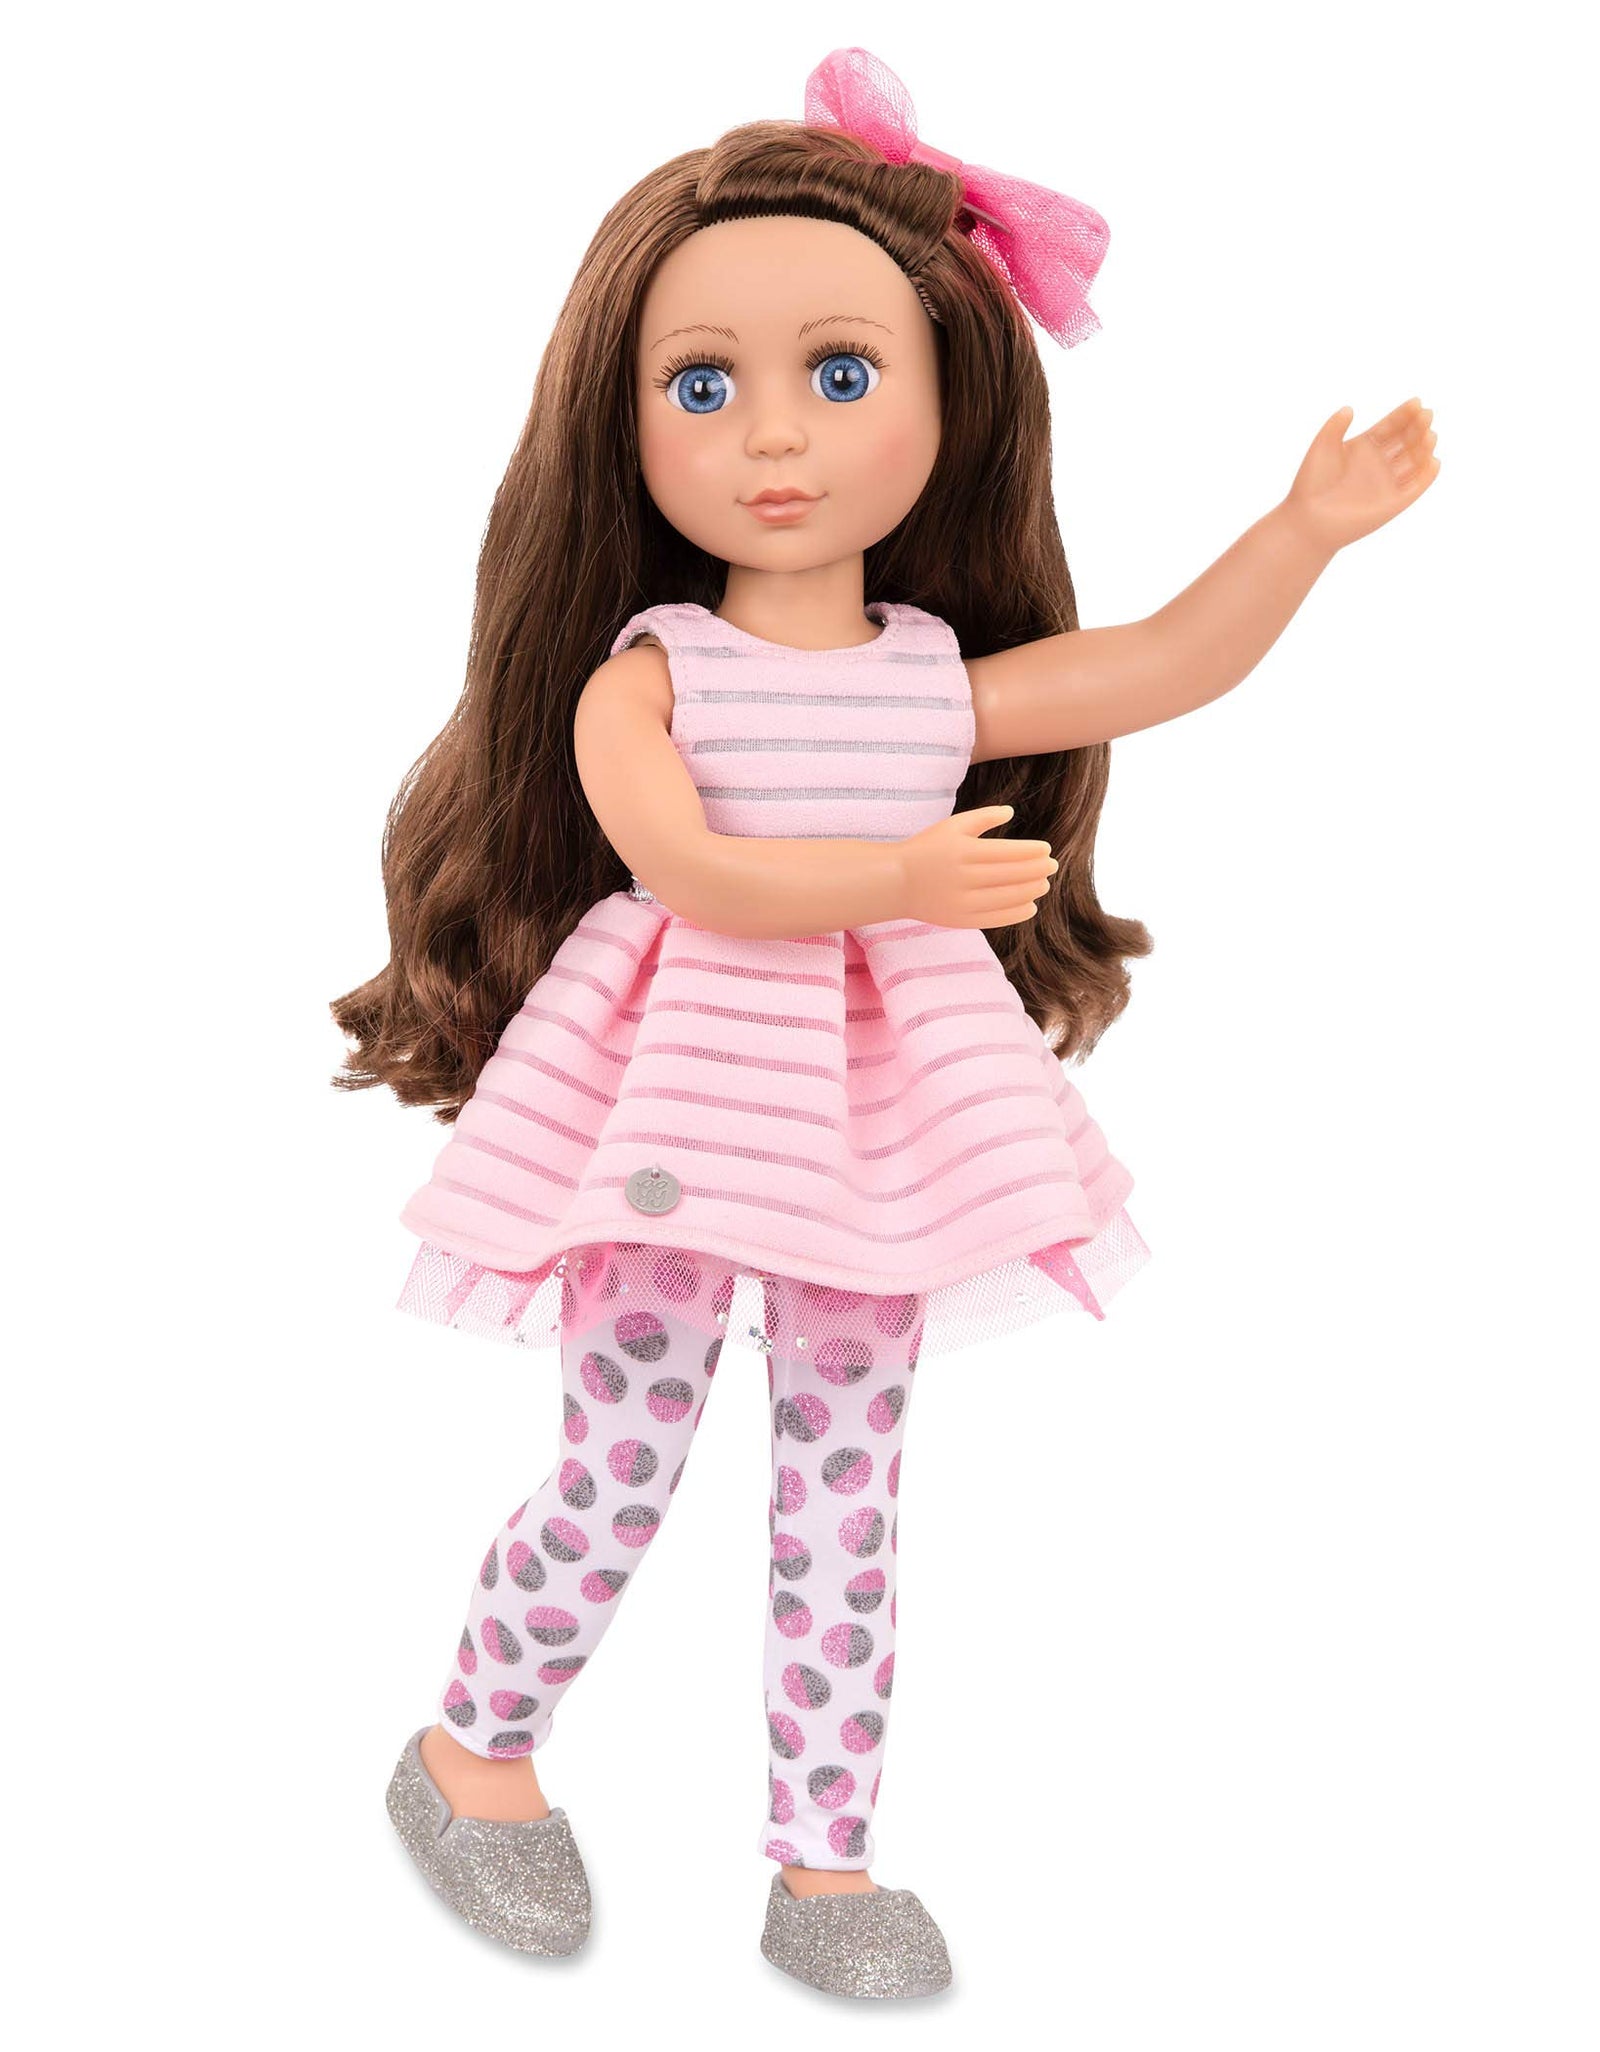 Glitter Girls Dolls by Battat - Bluebell 14" Poseable Fashion Doll - Dolls for Girls Age 3 & Up